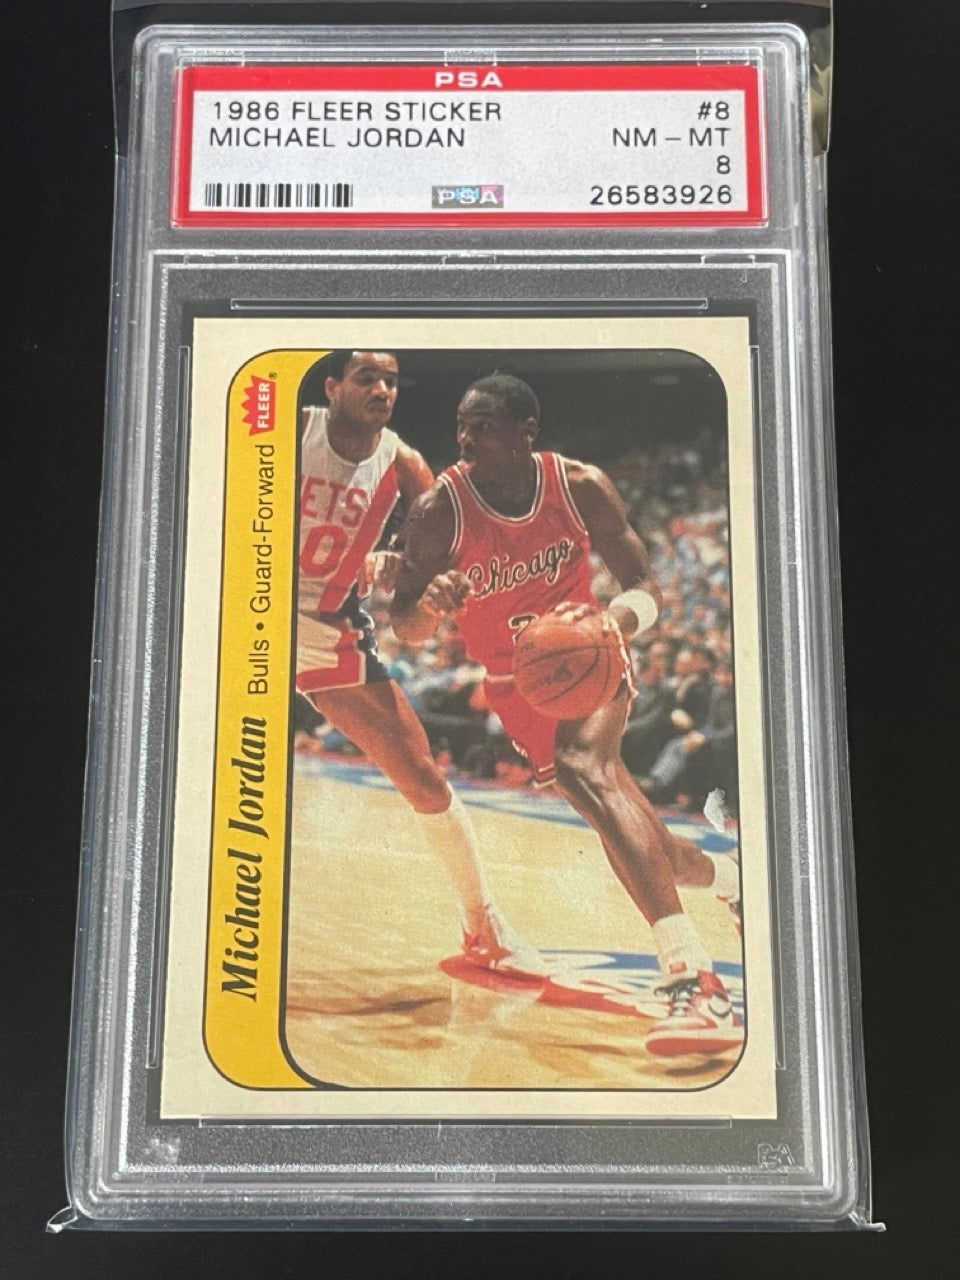 1986 Fleer Sticker Michael Jordan Rookie Card #8 PSA 8 Chicago Bulls